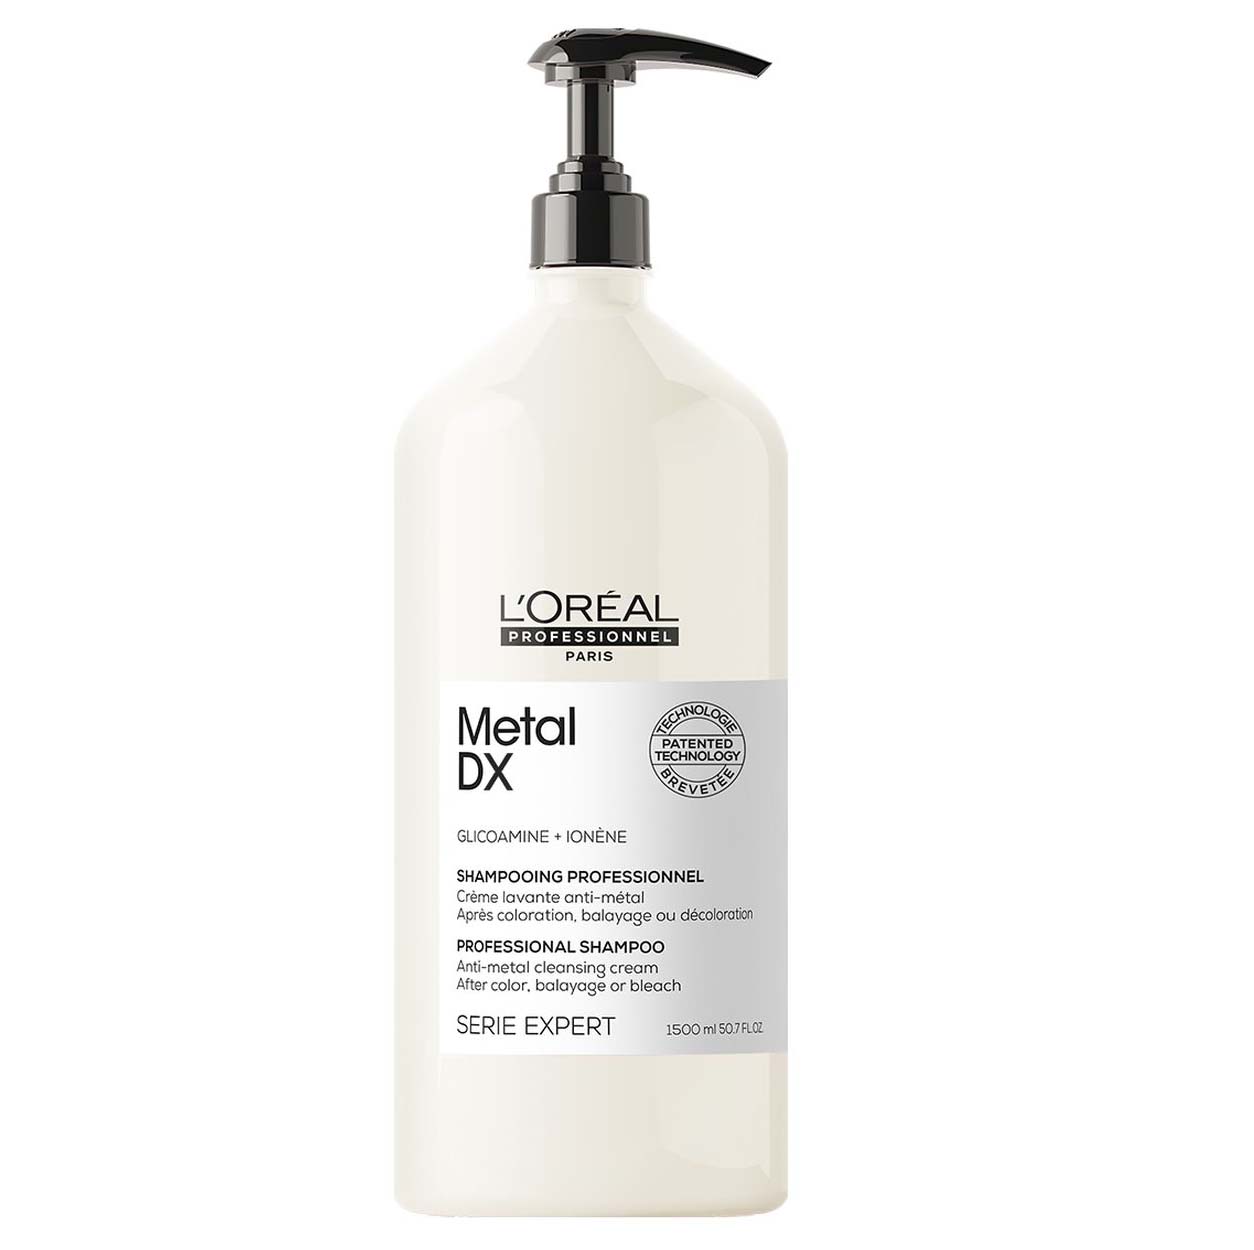 L'Oreal Professionnel Metal DX Shampoo 1500ml